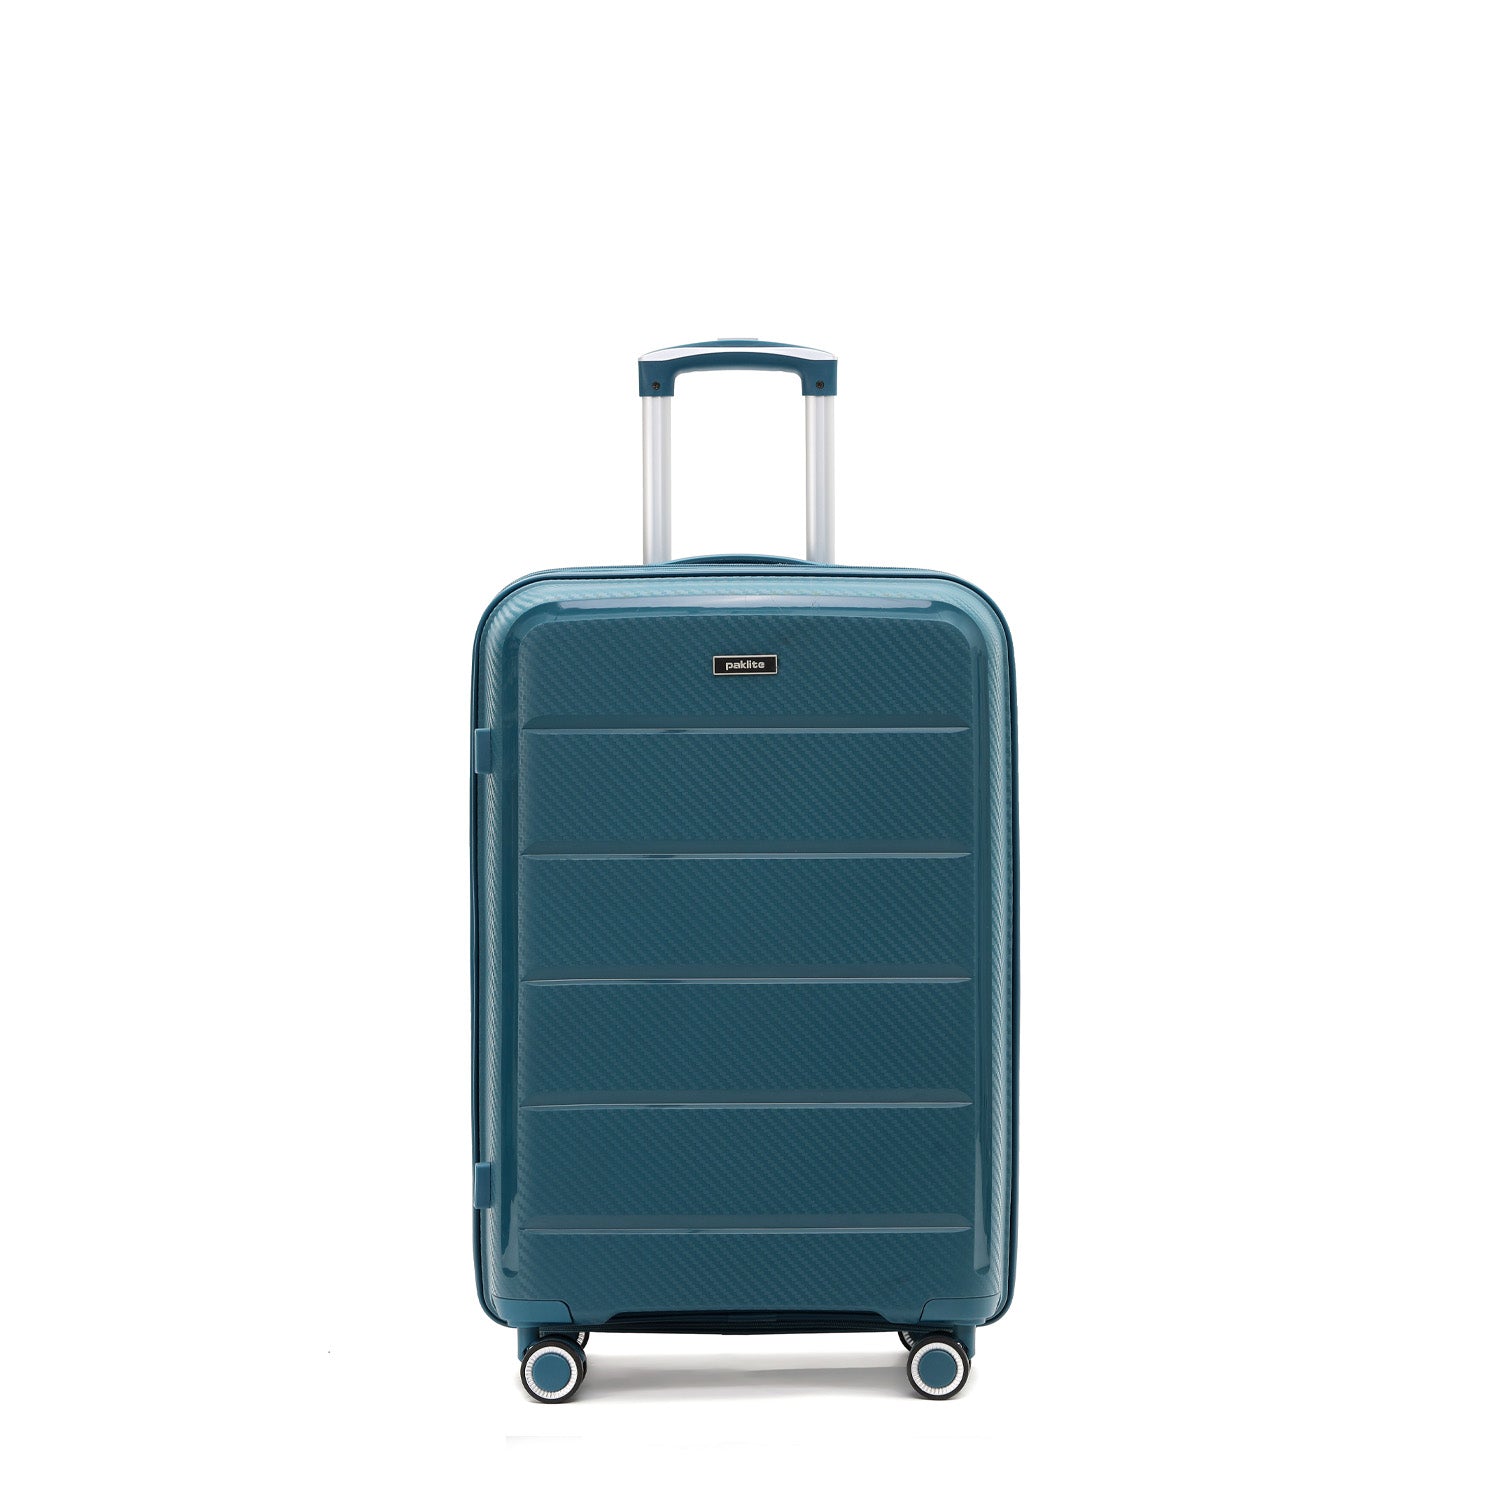 Paklite - PA7350 Medium 65cm spinner suitcase - Blue